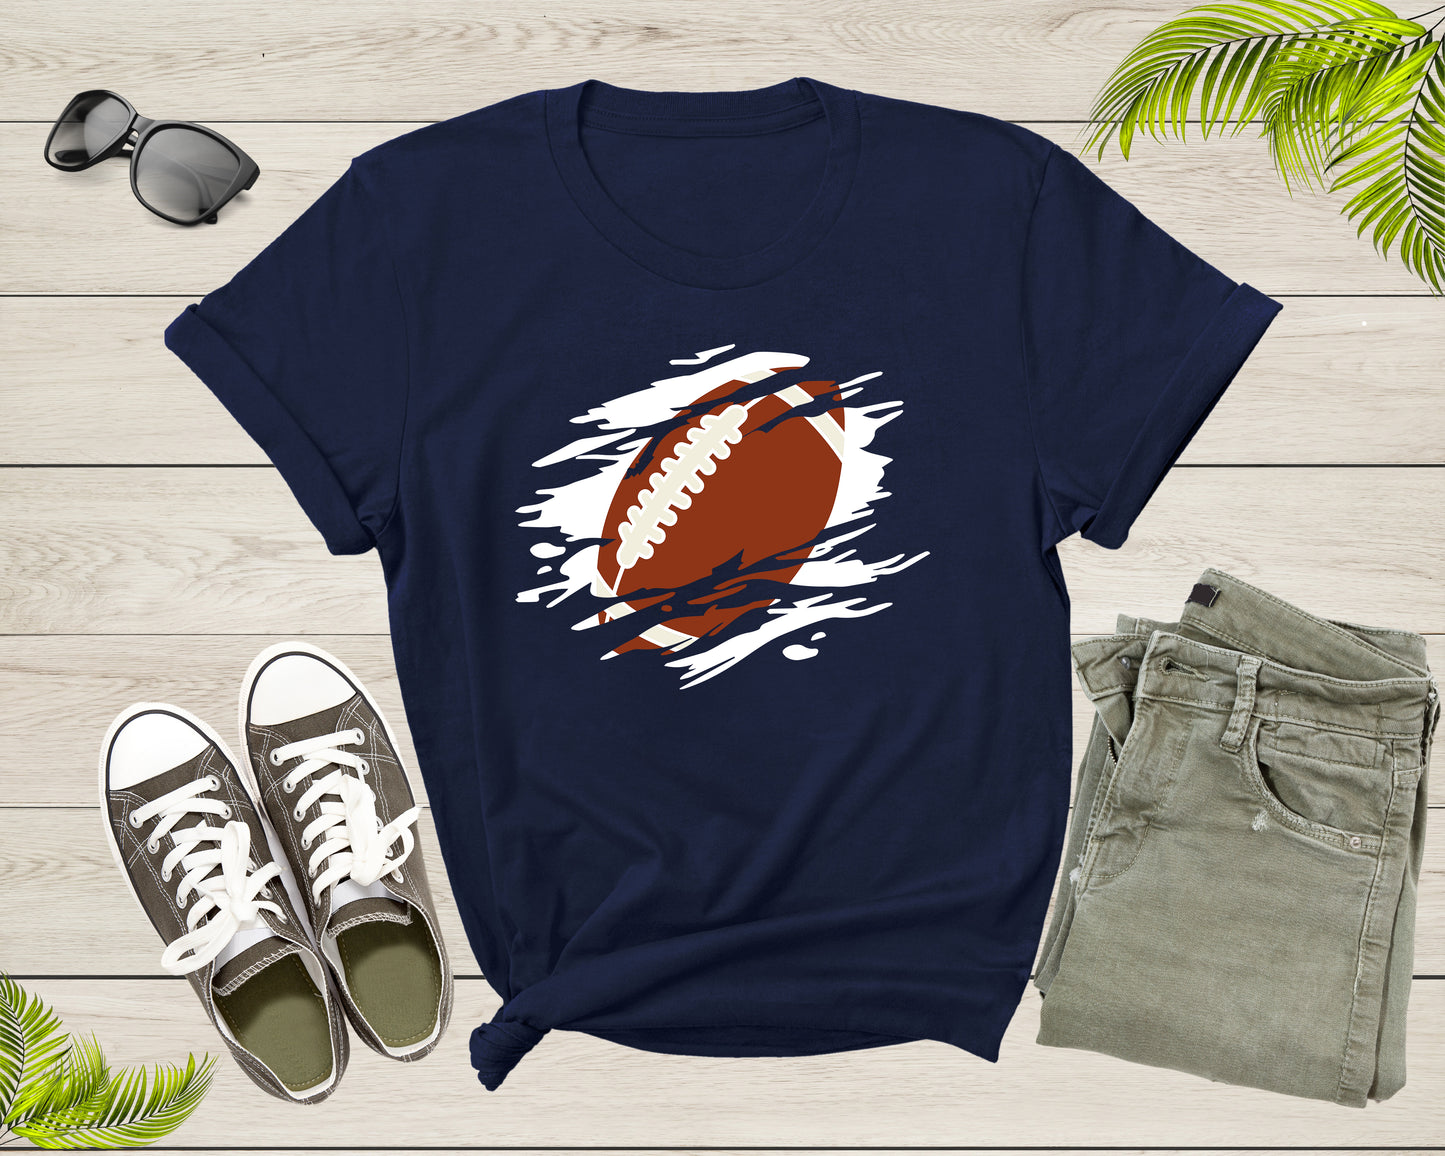 Cool Football Ball Silhouette Football Sports Team Games T-Shirt American Football Lover Gift T Shirt for Men Women Kids Boys Girls